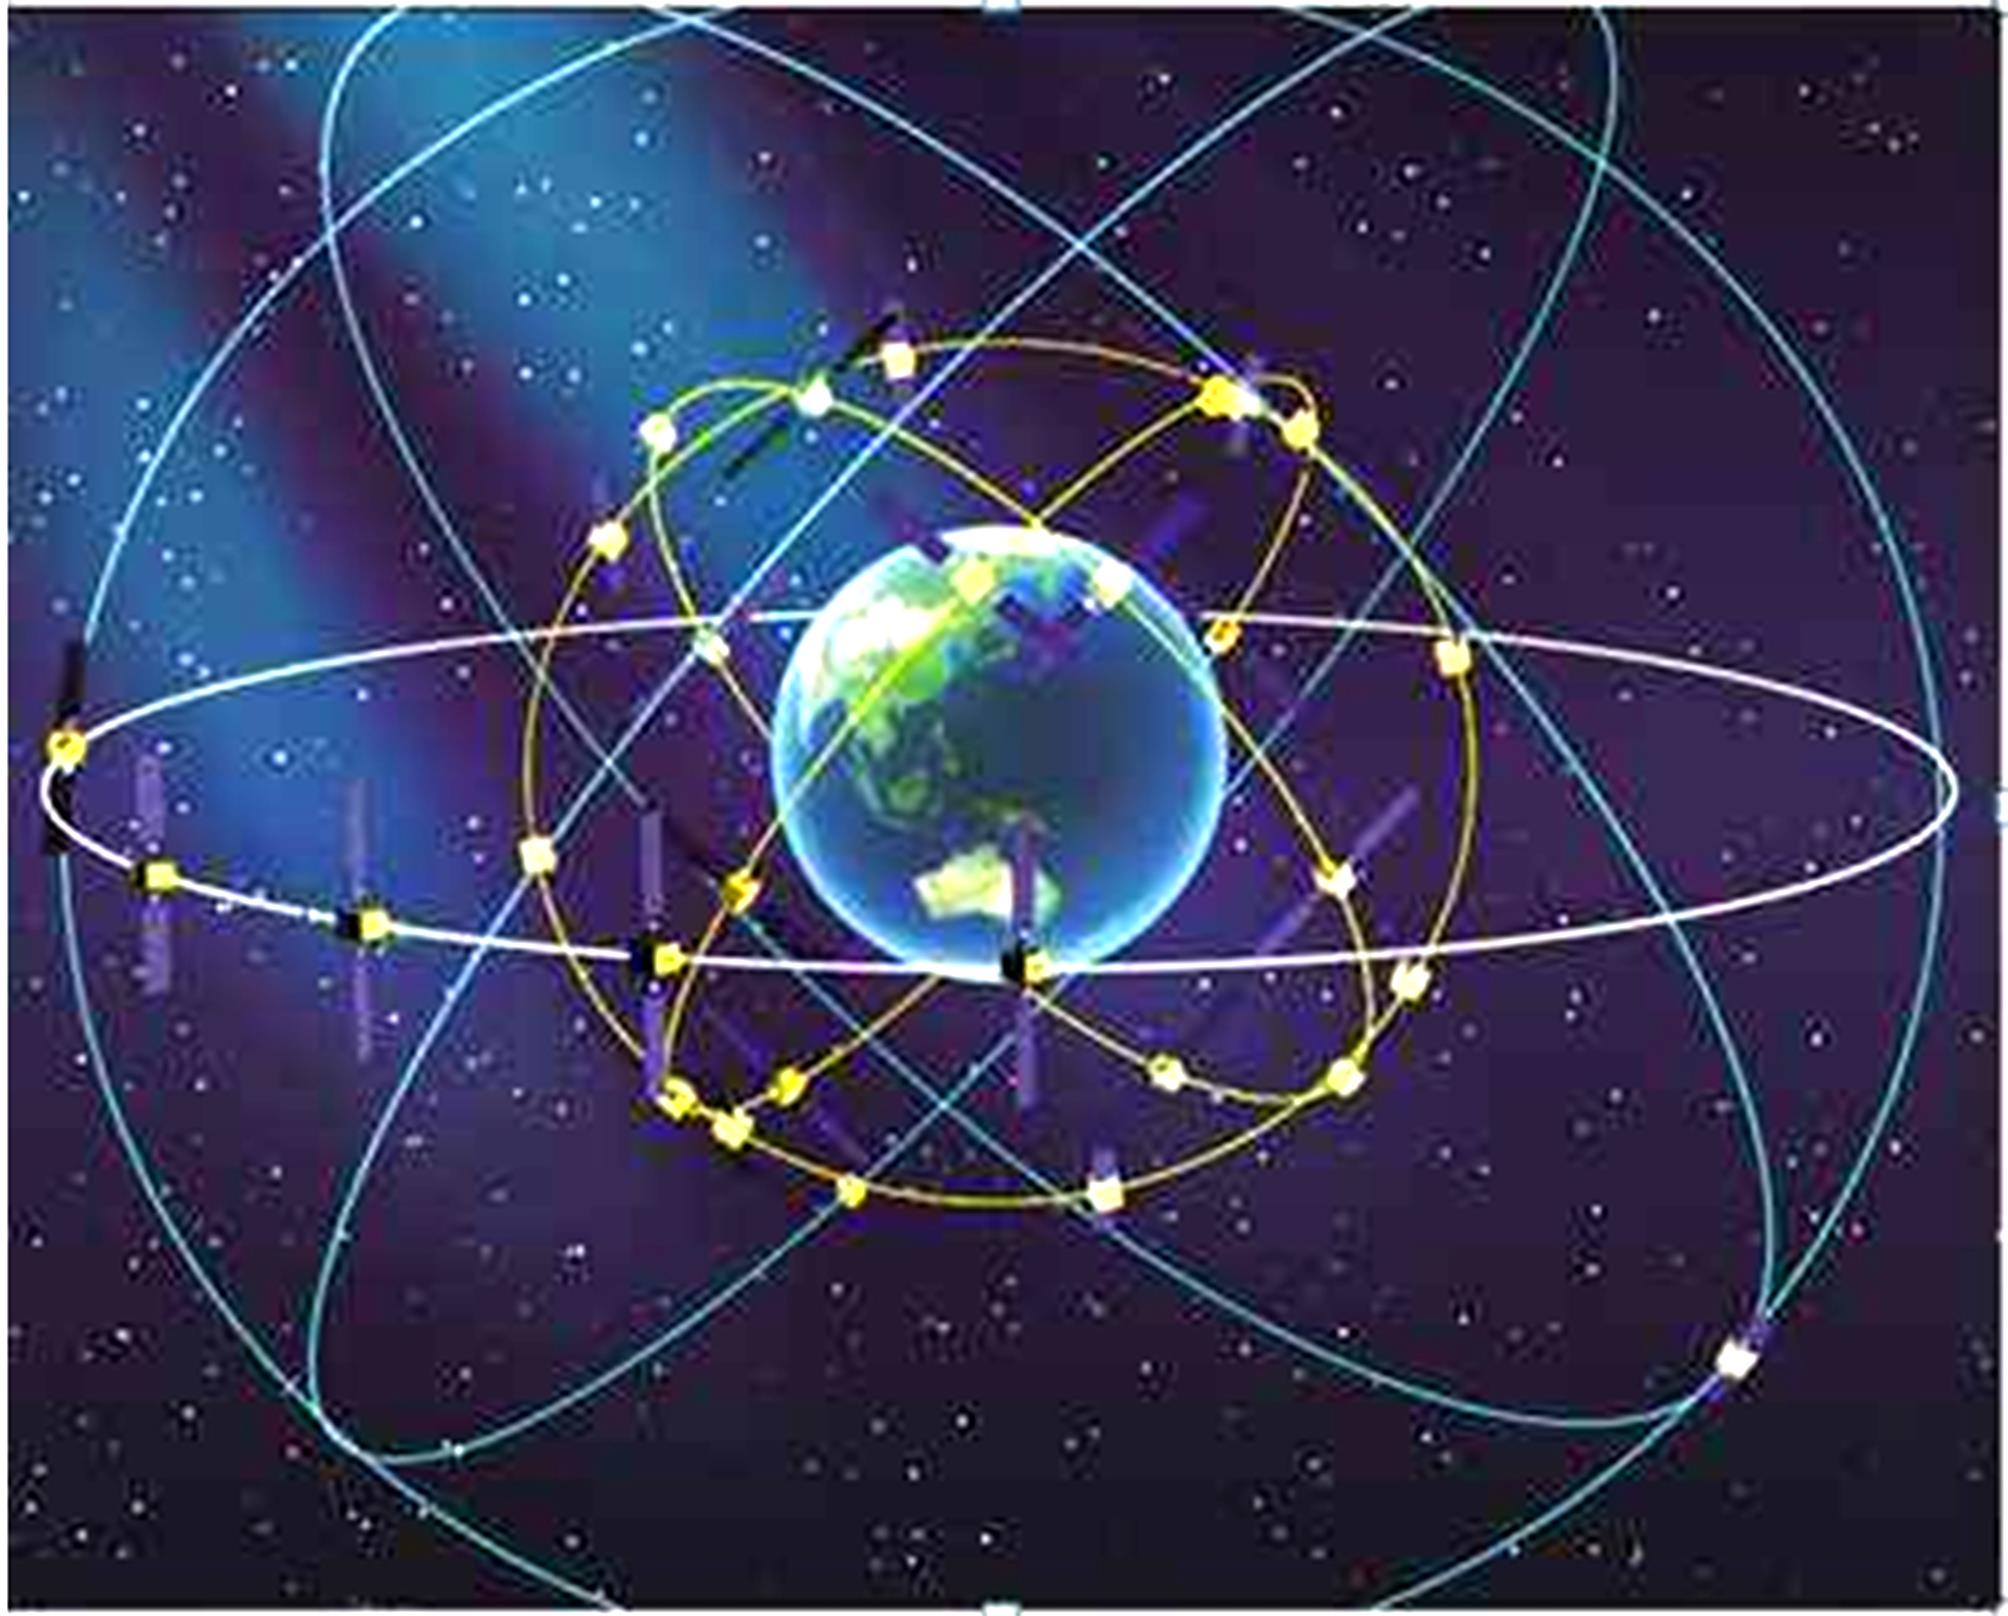 Beidou navigation system's satellites